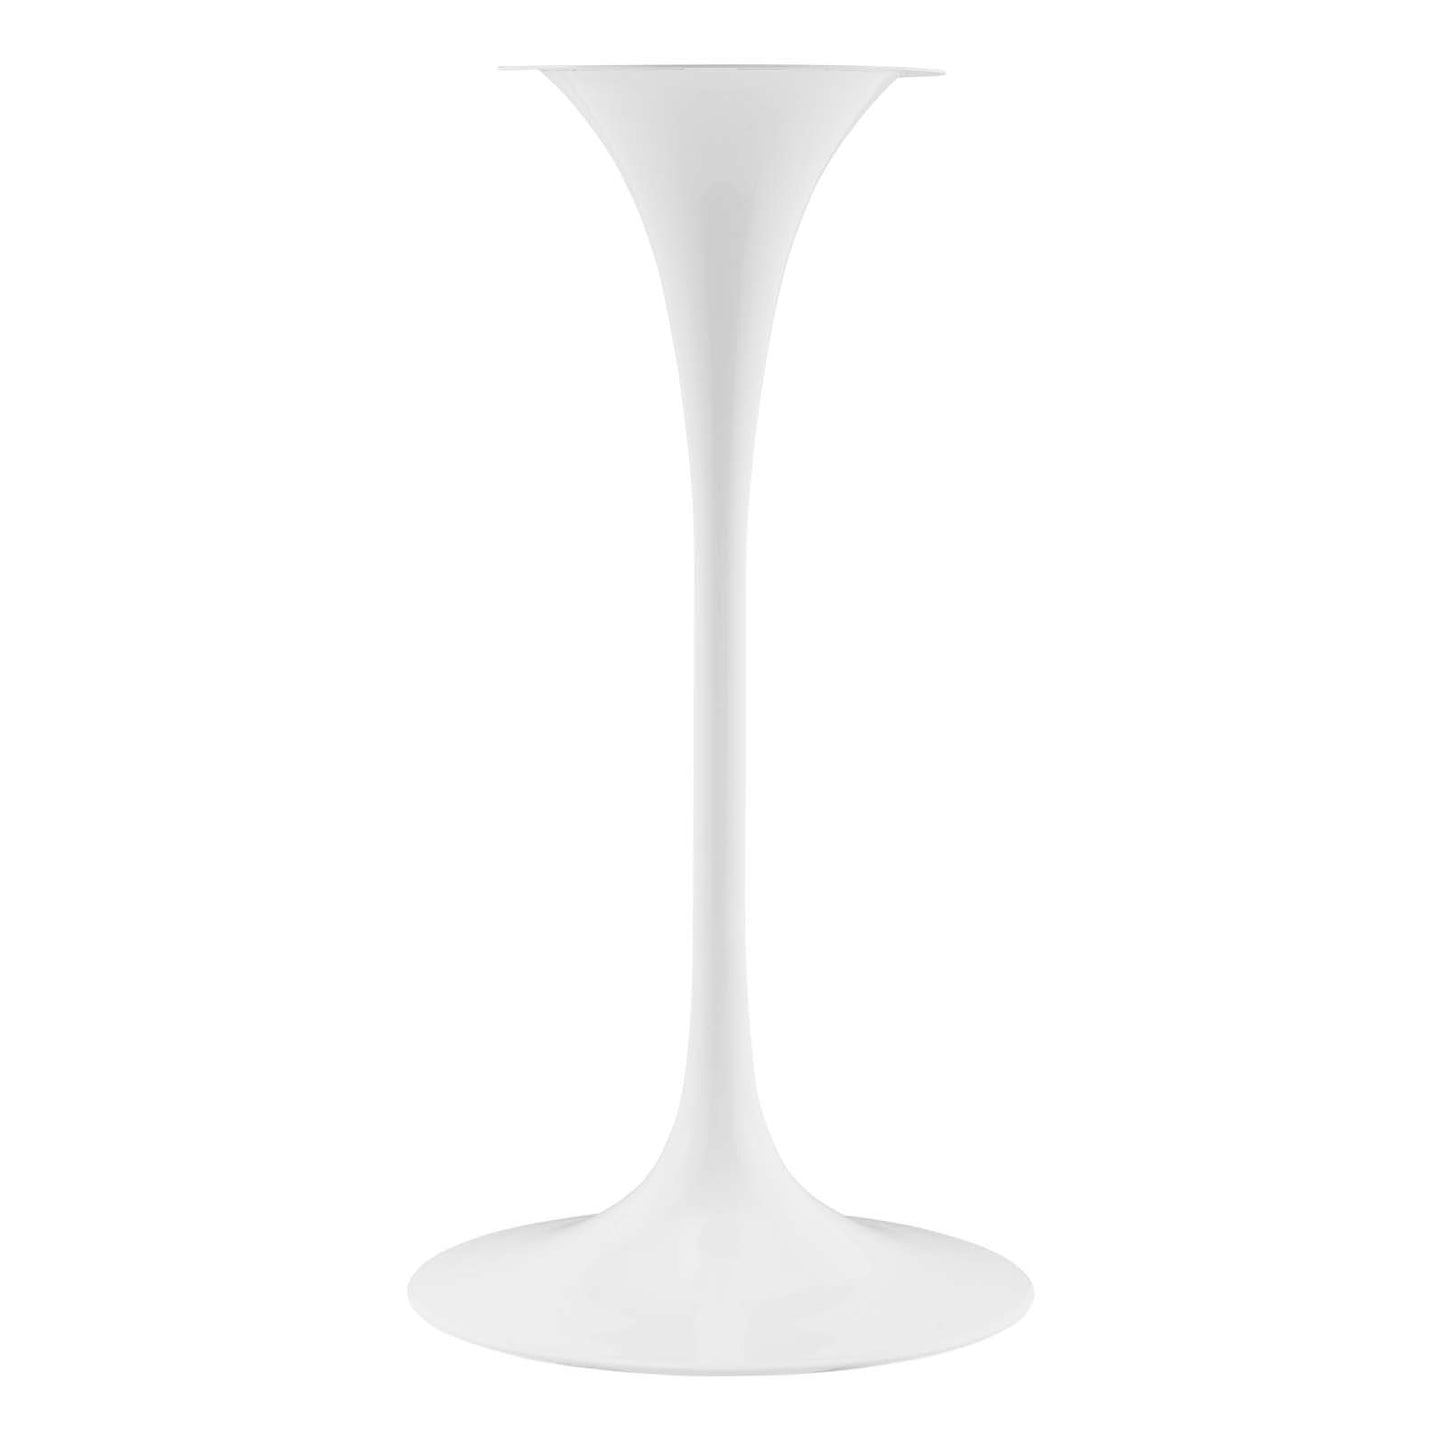 Lippa 28" Artificial Marble Bar Table